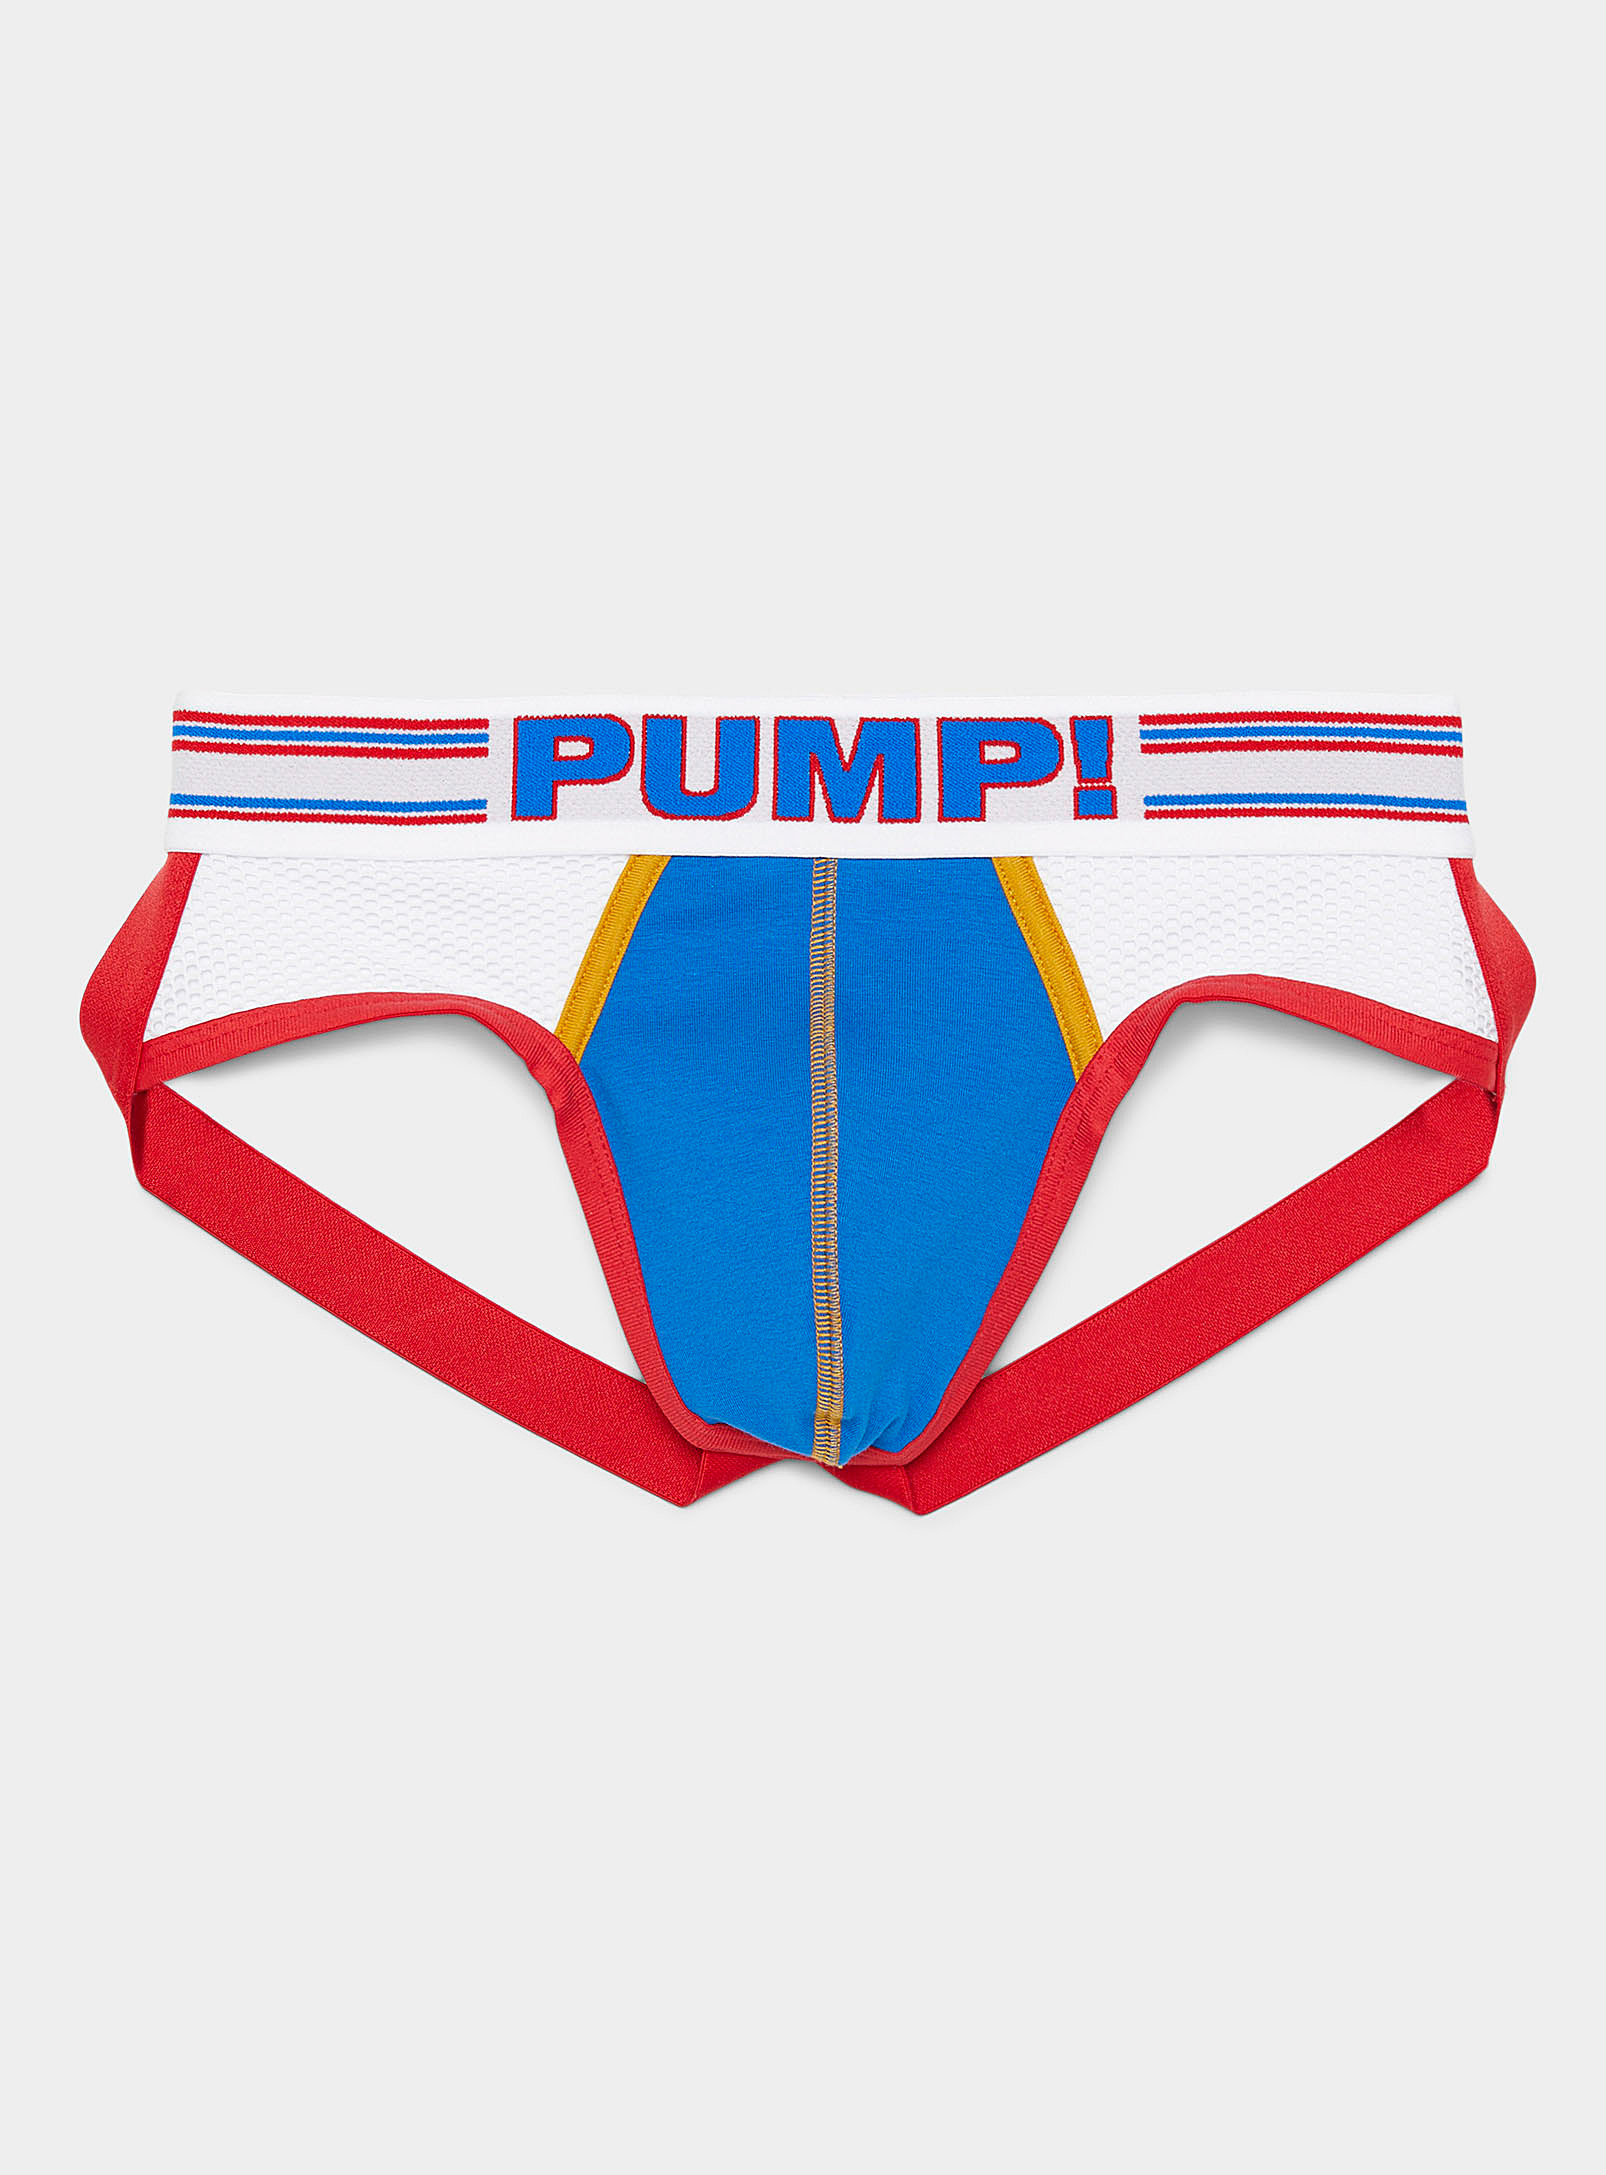 PUMP! Play Jockstrap - Underwear Expert